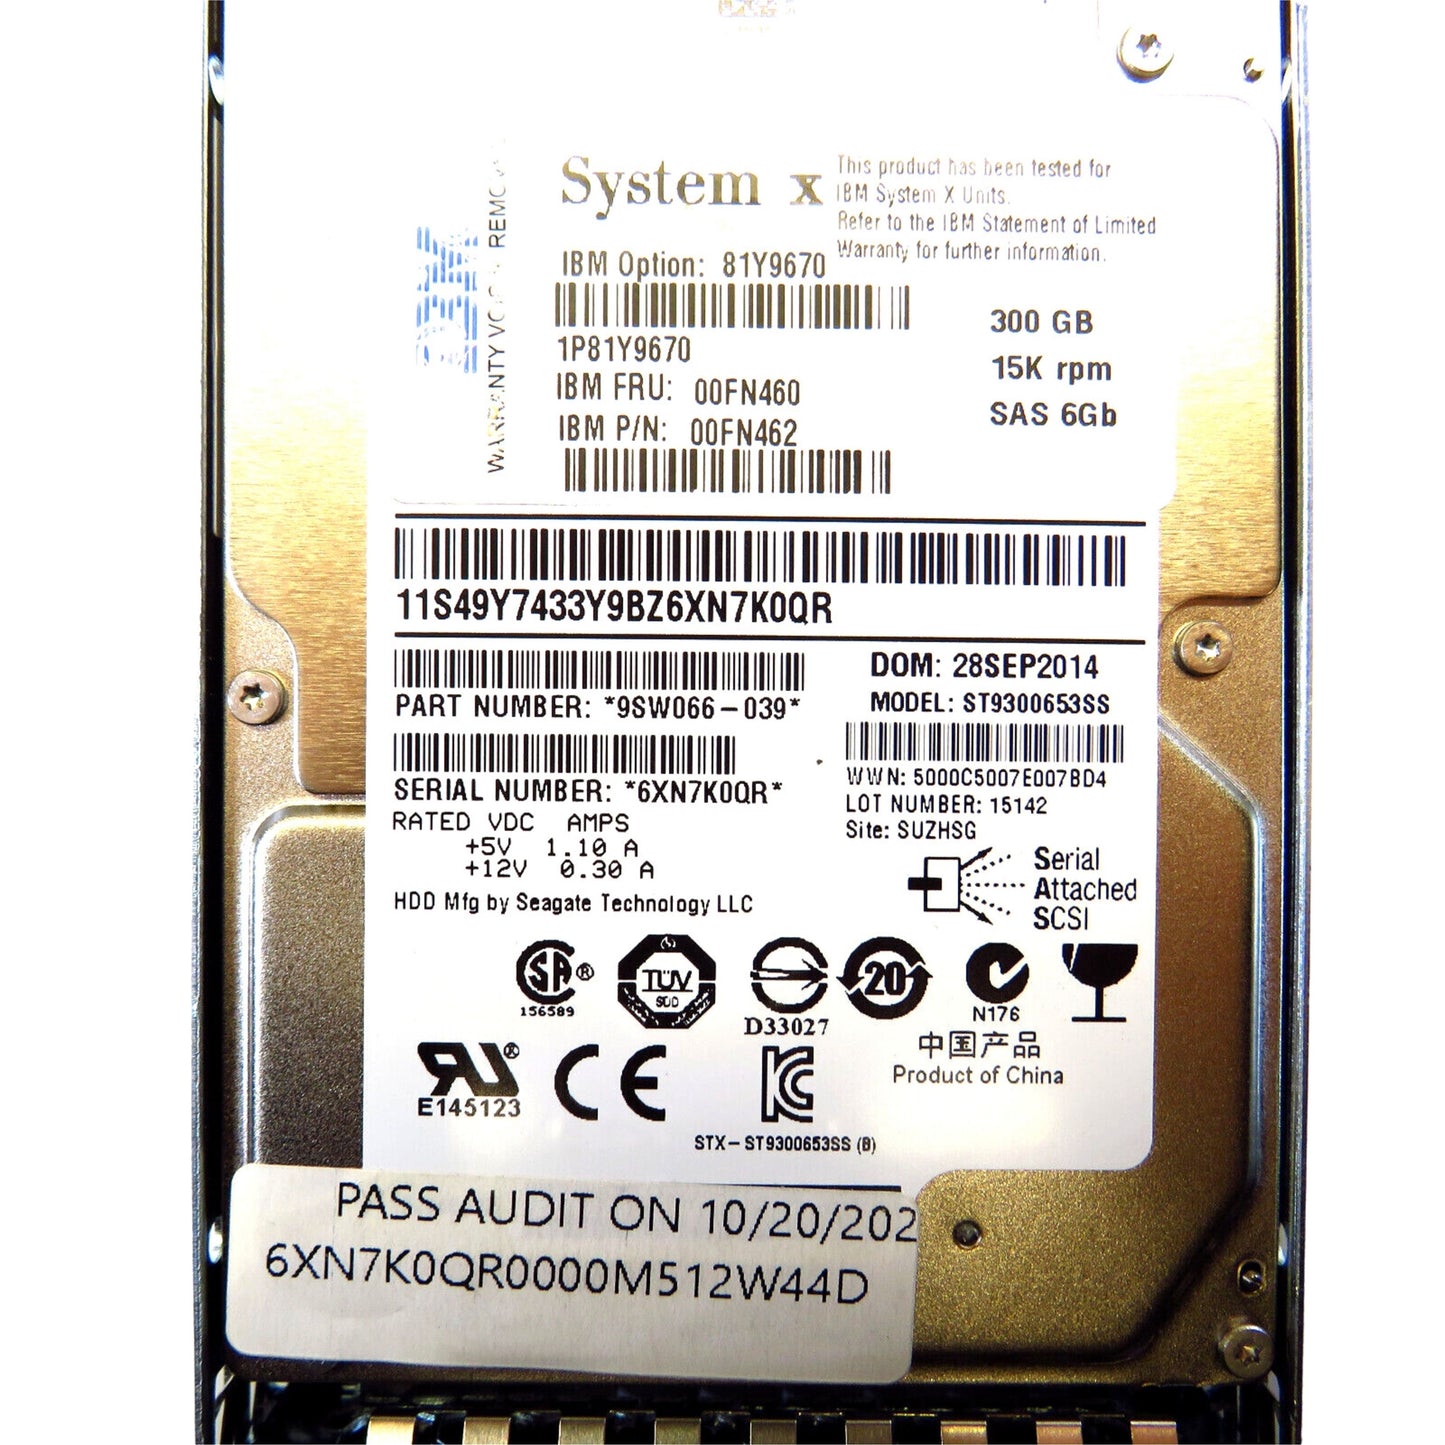 IBM 00FN460 2.5" 300GB 15000RPM SAS 6Gb/s Hard Disk Drive (HDD), Silver (Refurbished)